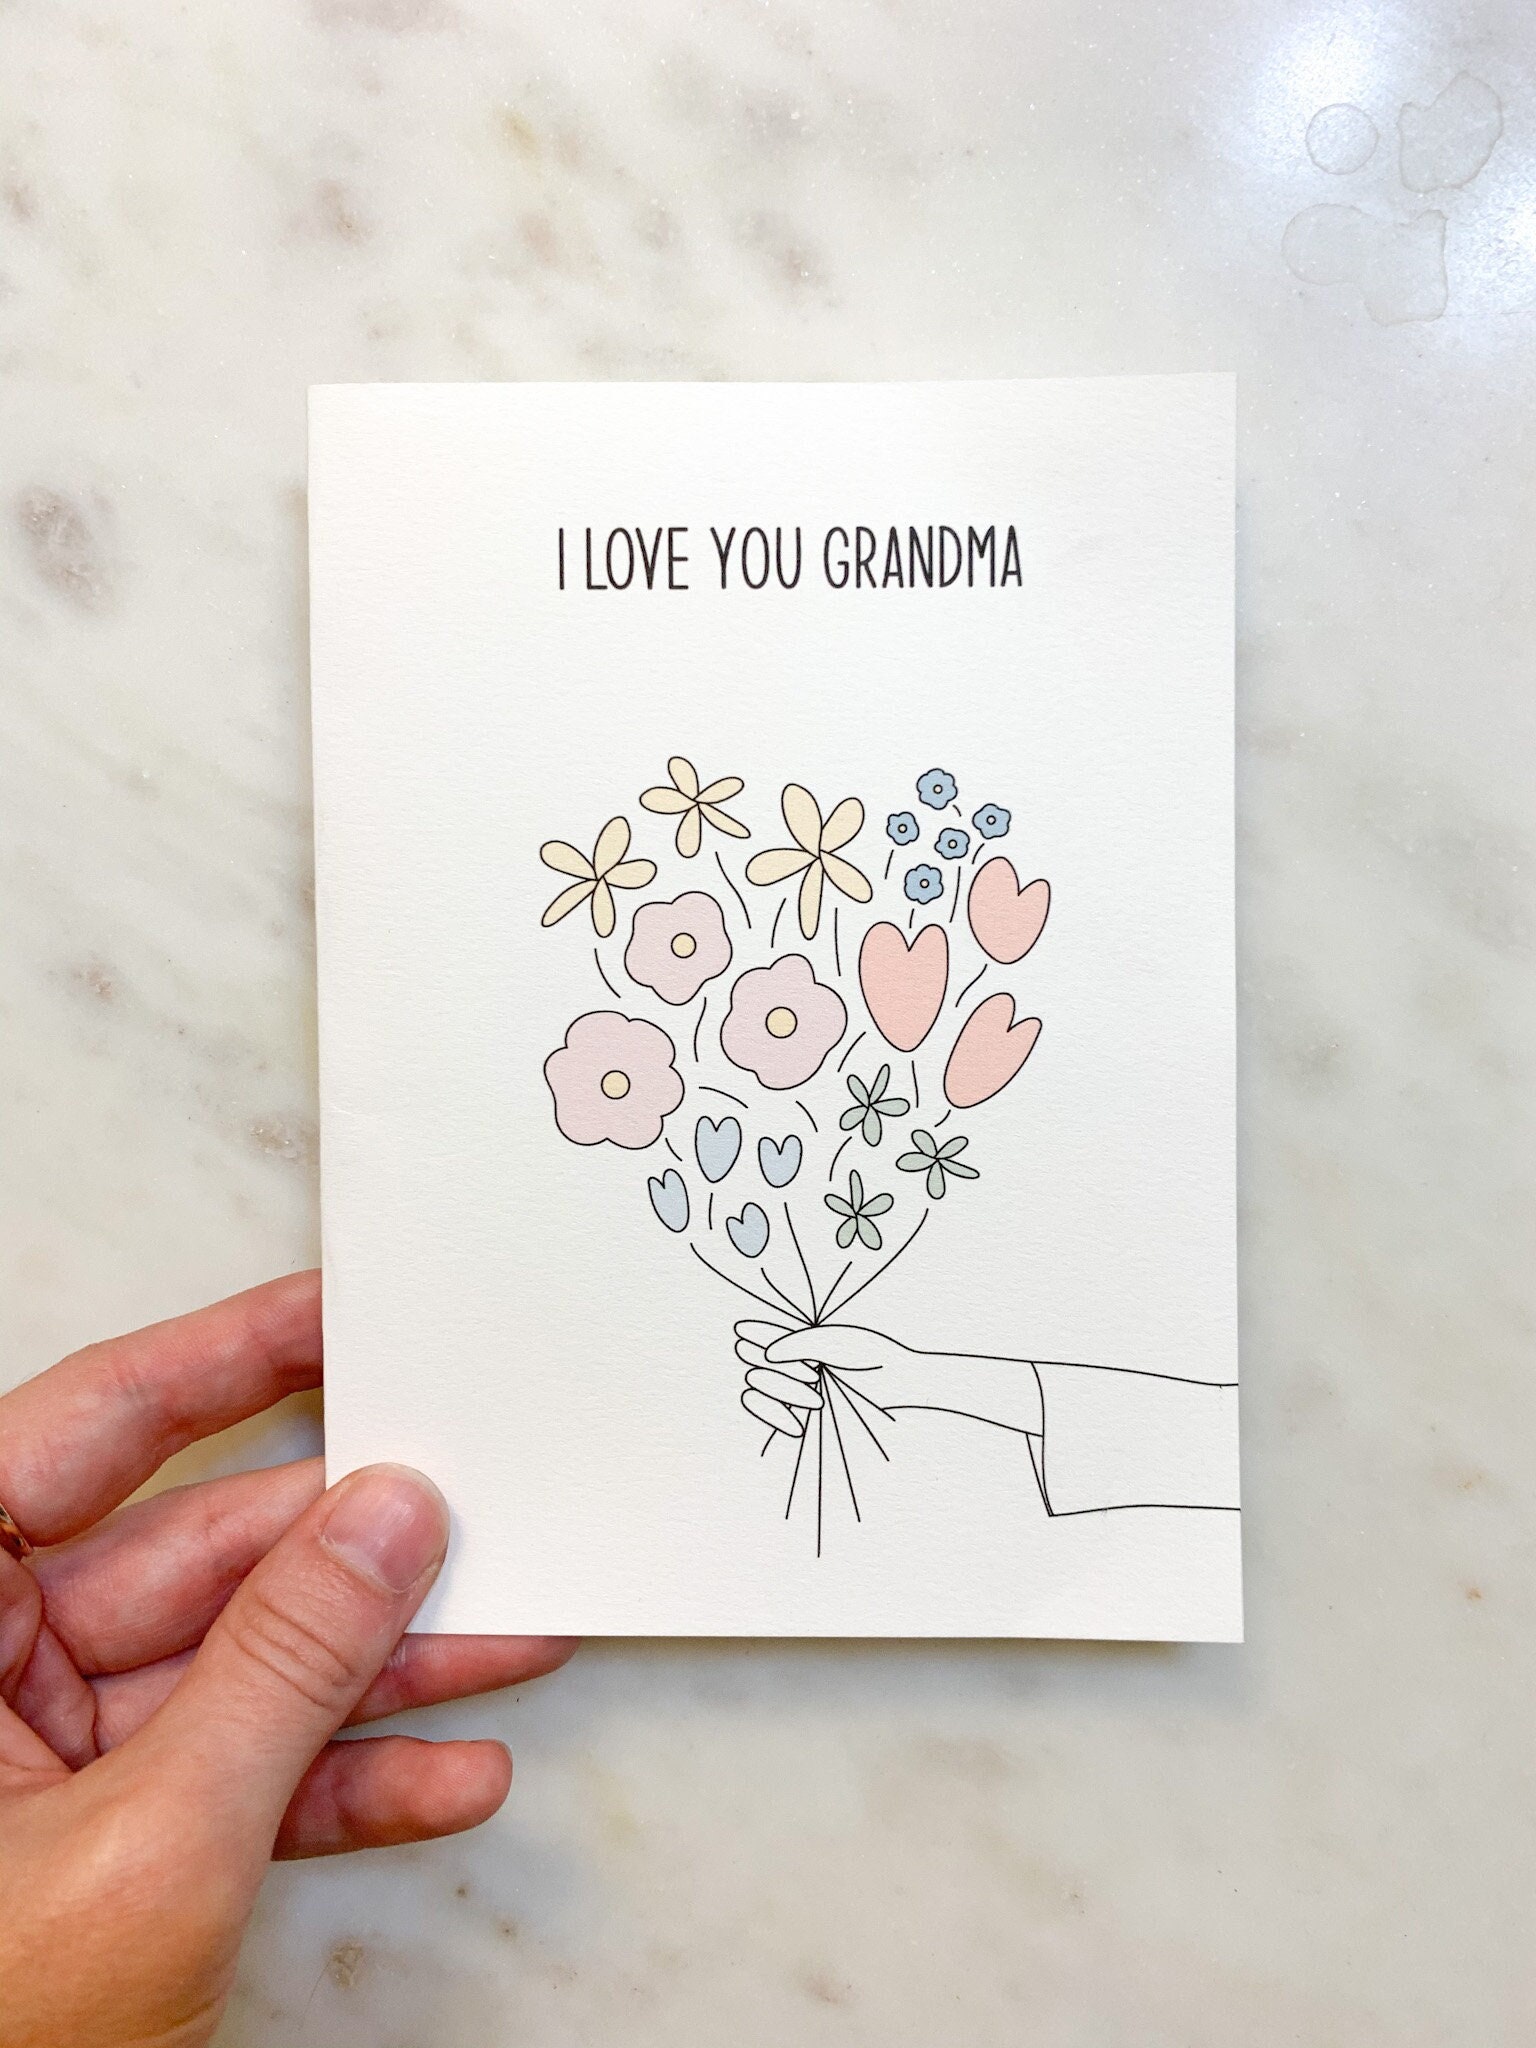 Grandma Birthday Card I Love You Grandma Cards for Grandma image